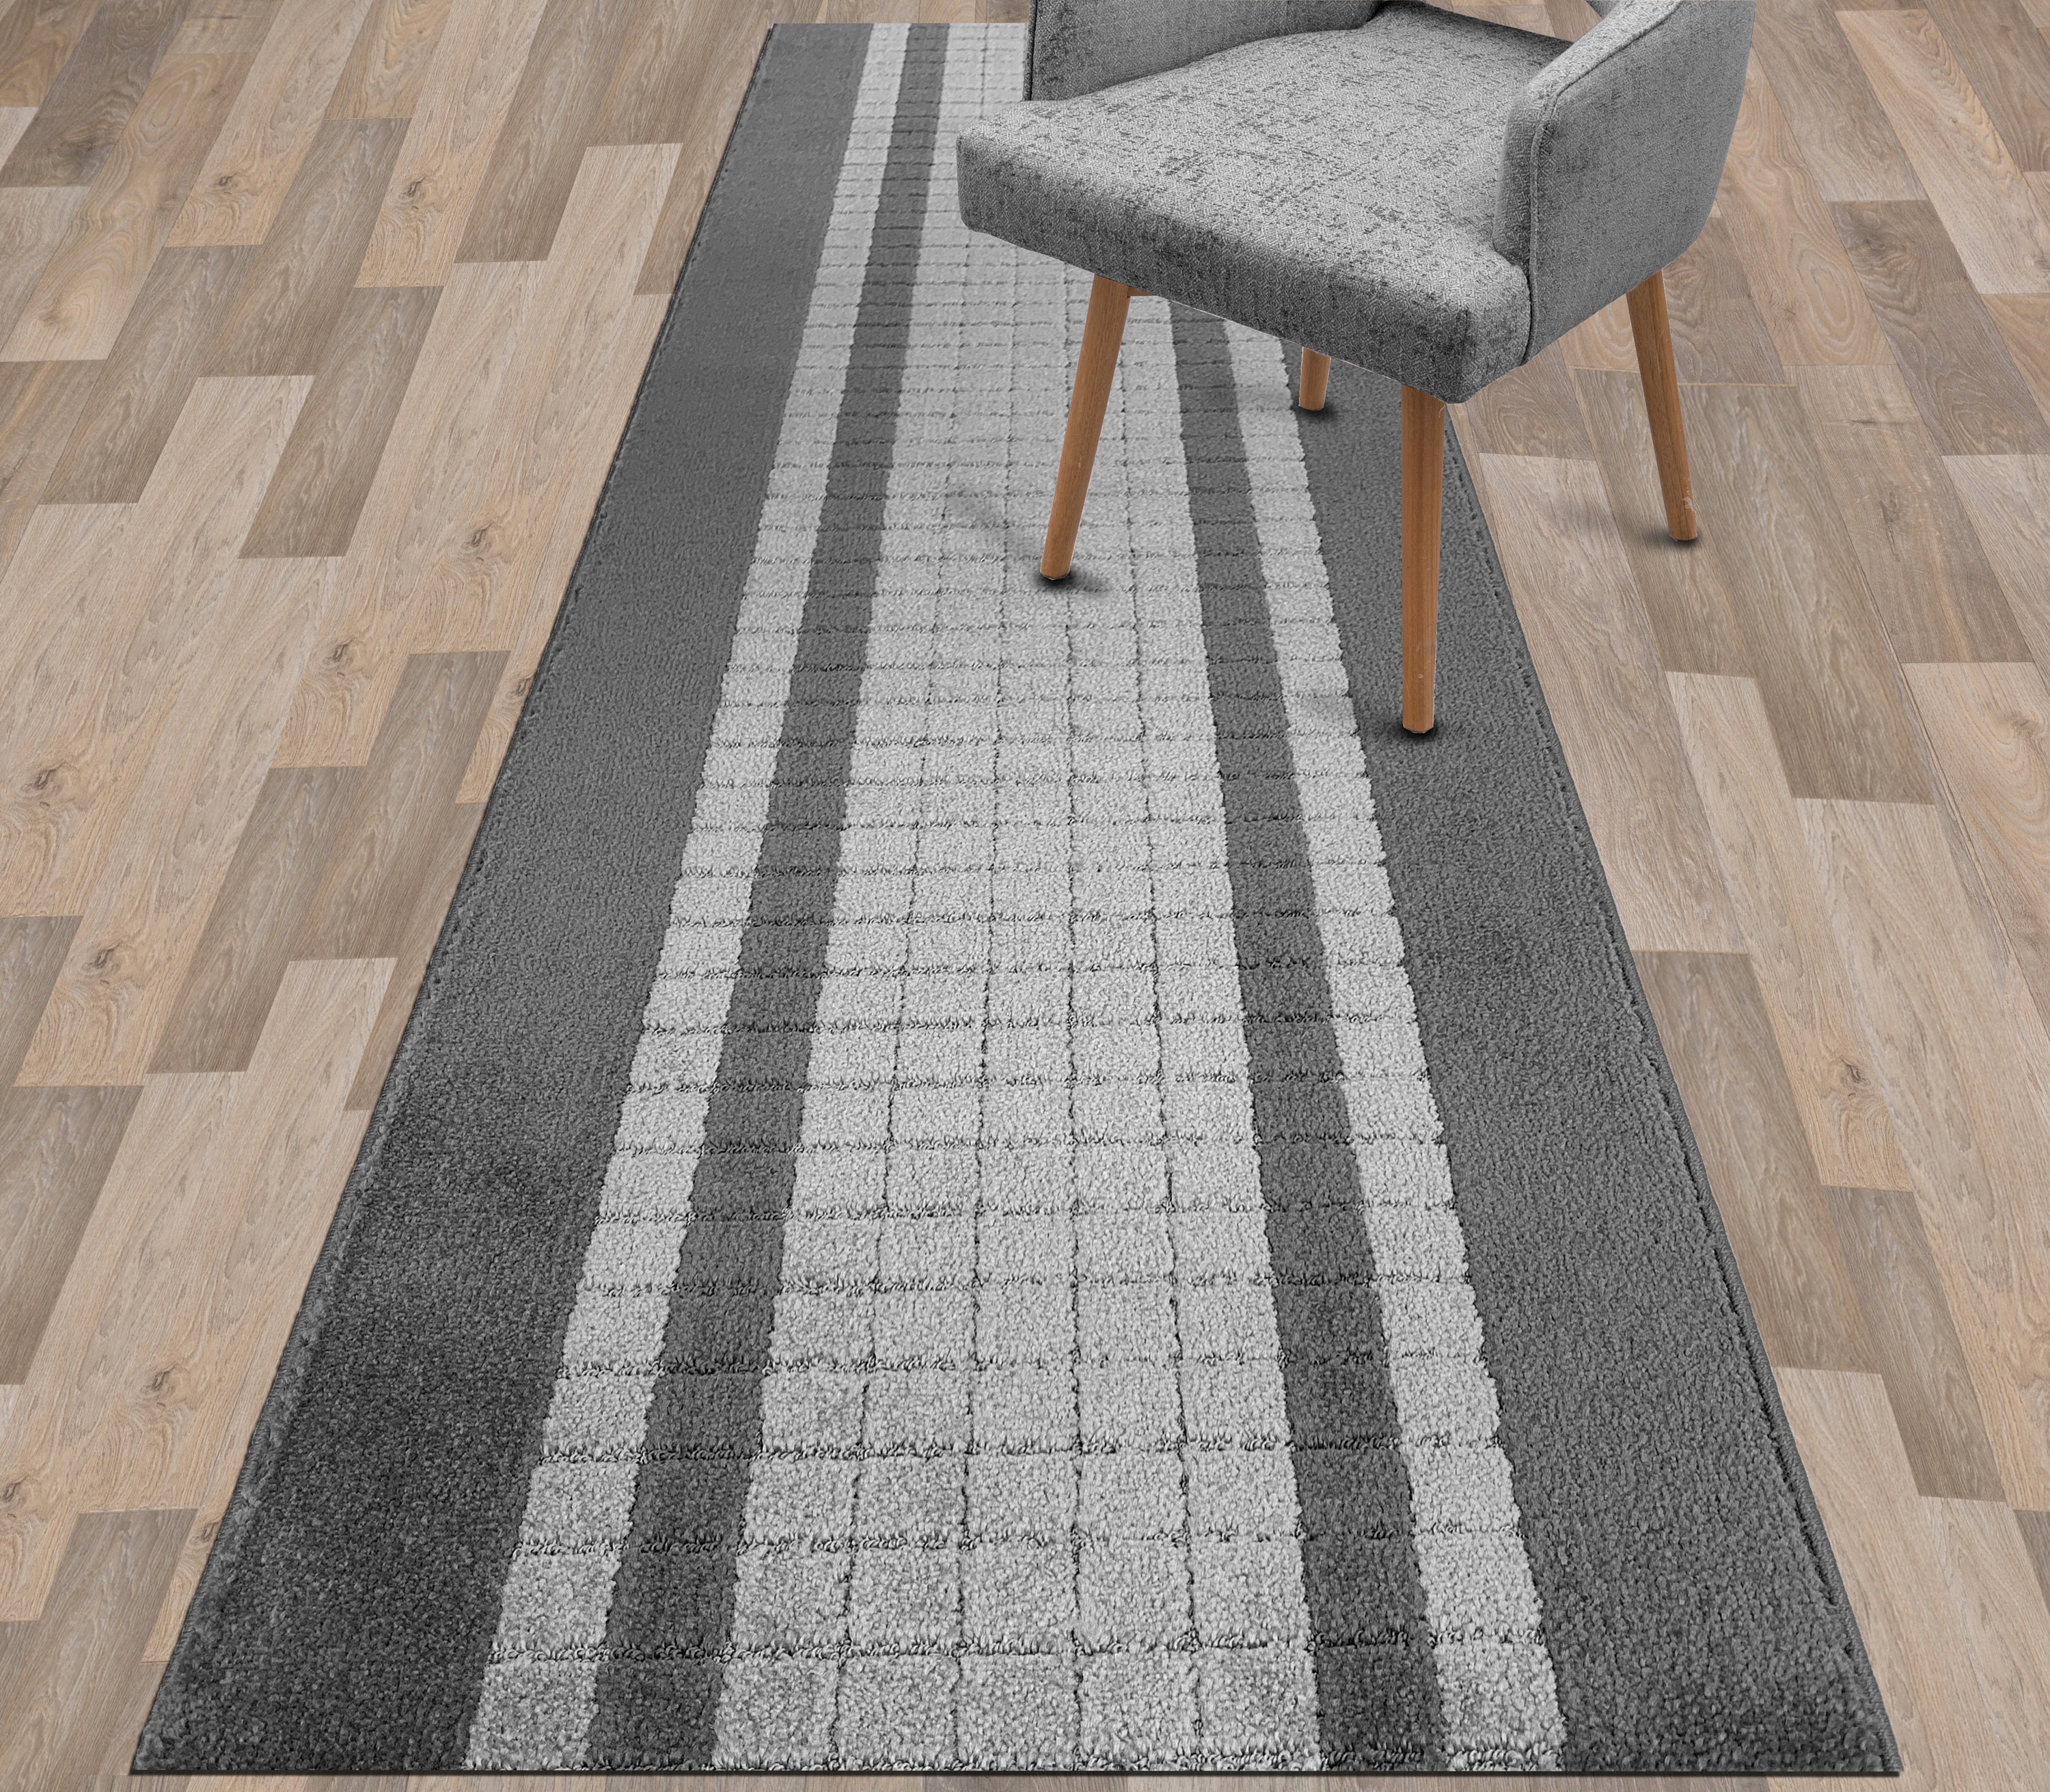 2 Inch by 60 Feet White Indoor / Outdoor Carpet Edge Binding Tape for Tile  Floors - China Edge Binding Tape and Binding Tape for Tile Floors price